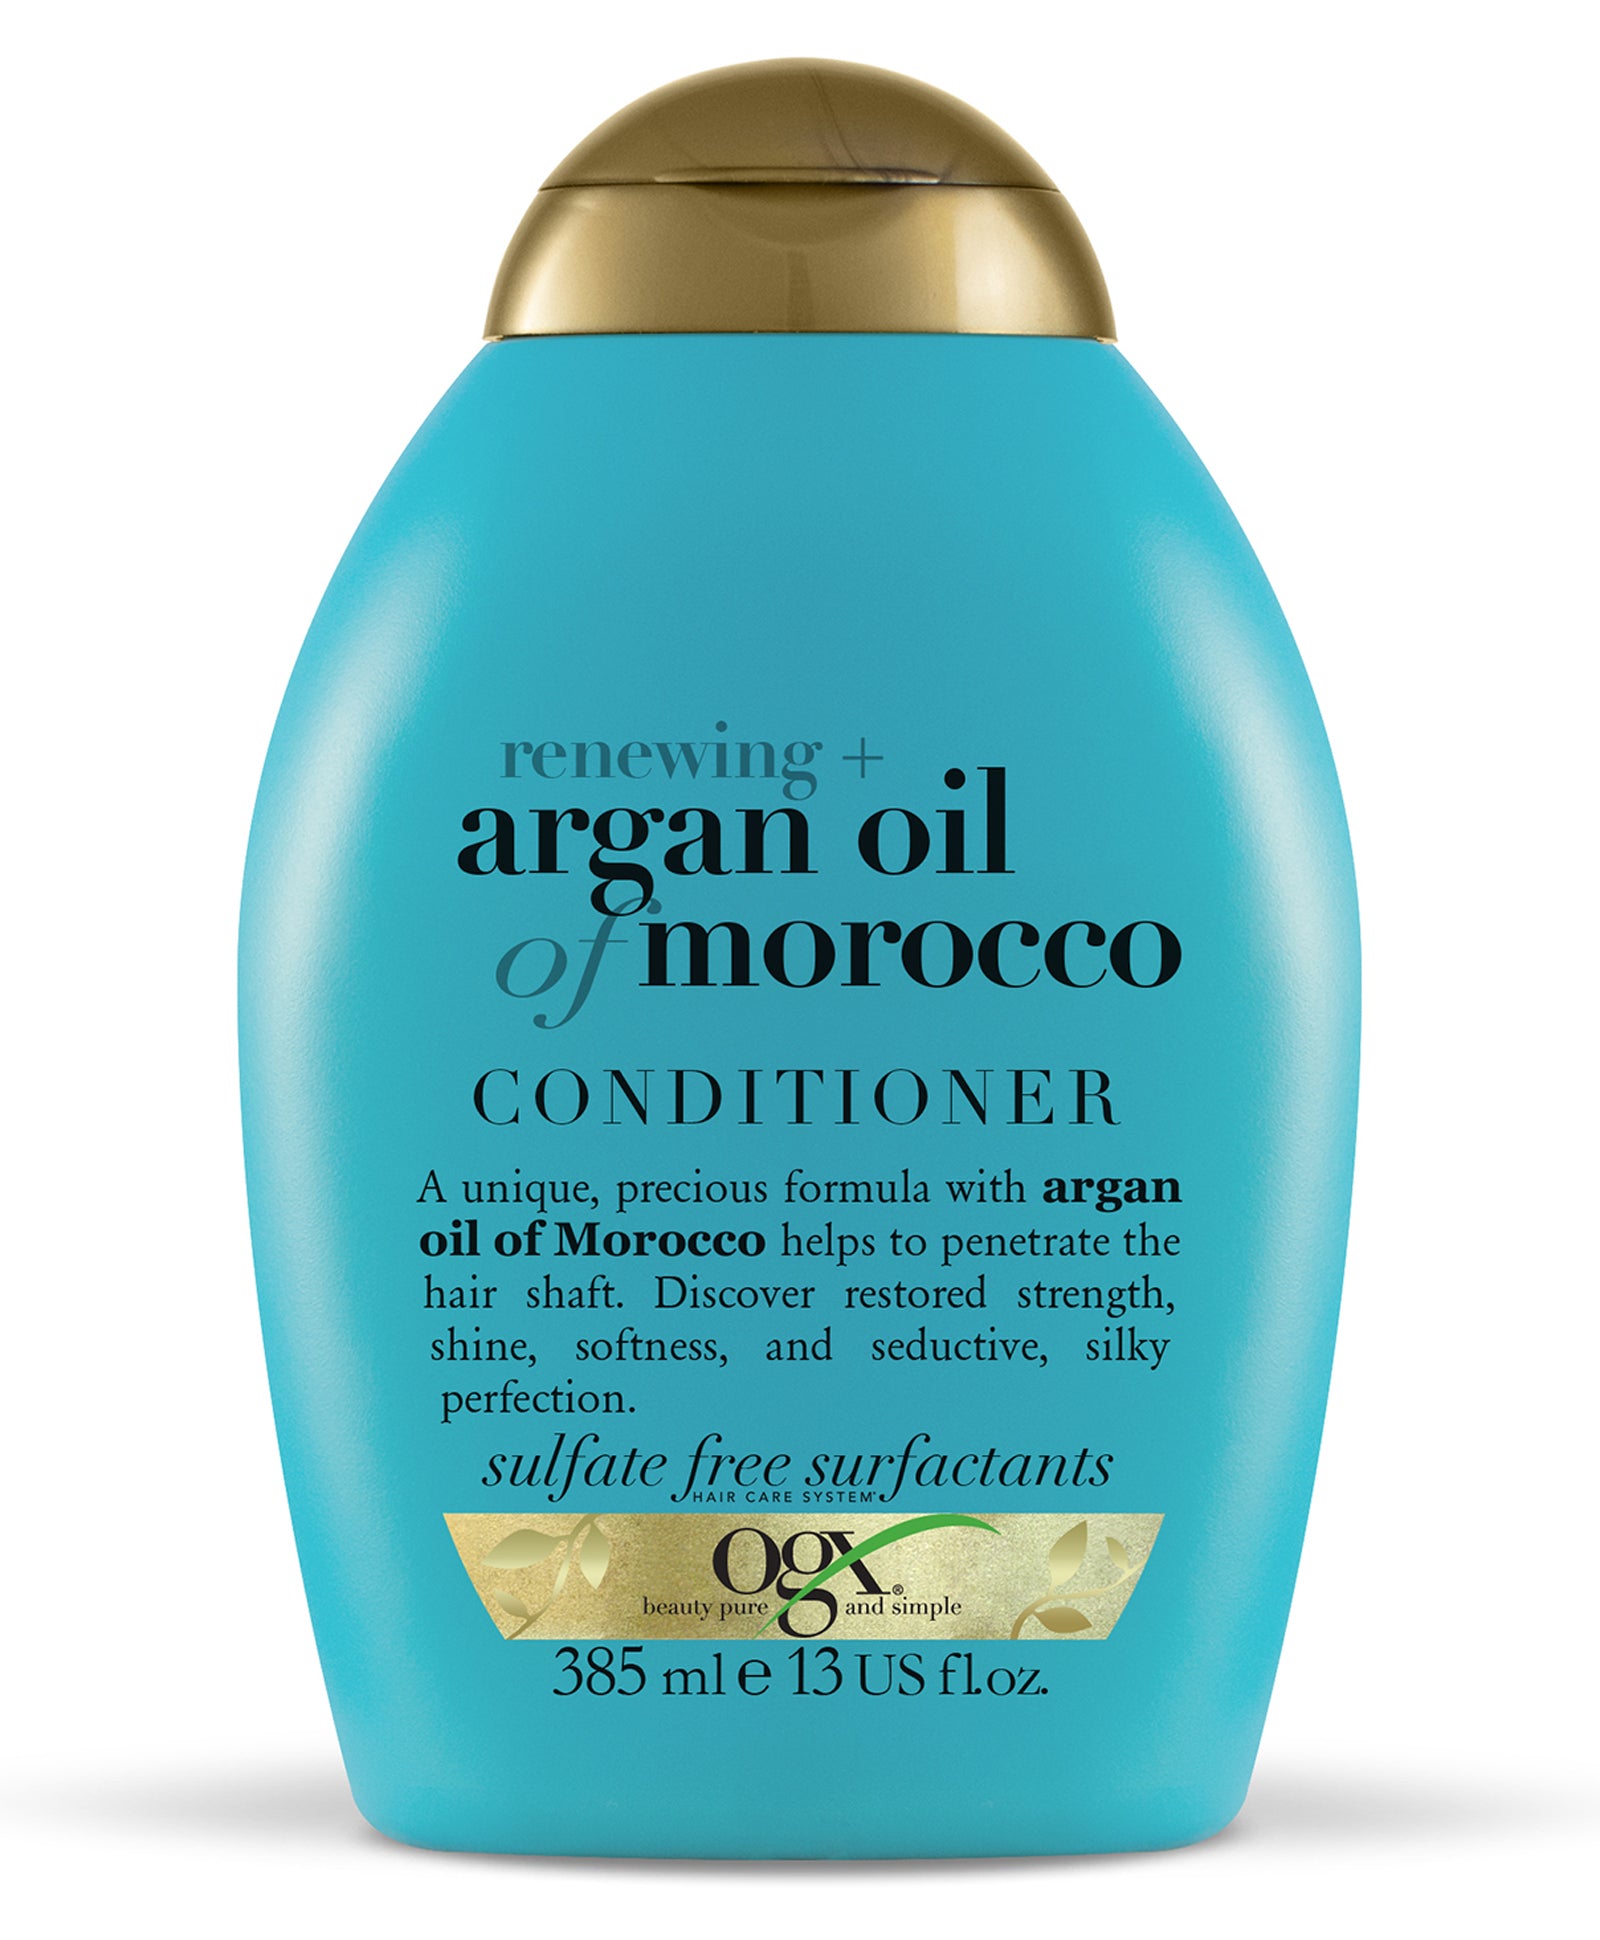 Ogx Argan oil of morocco conditioner 385ml